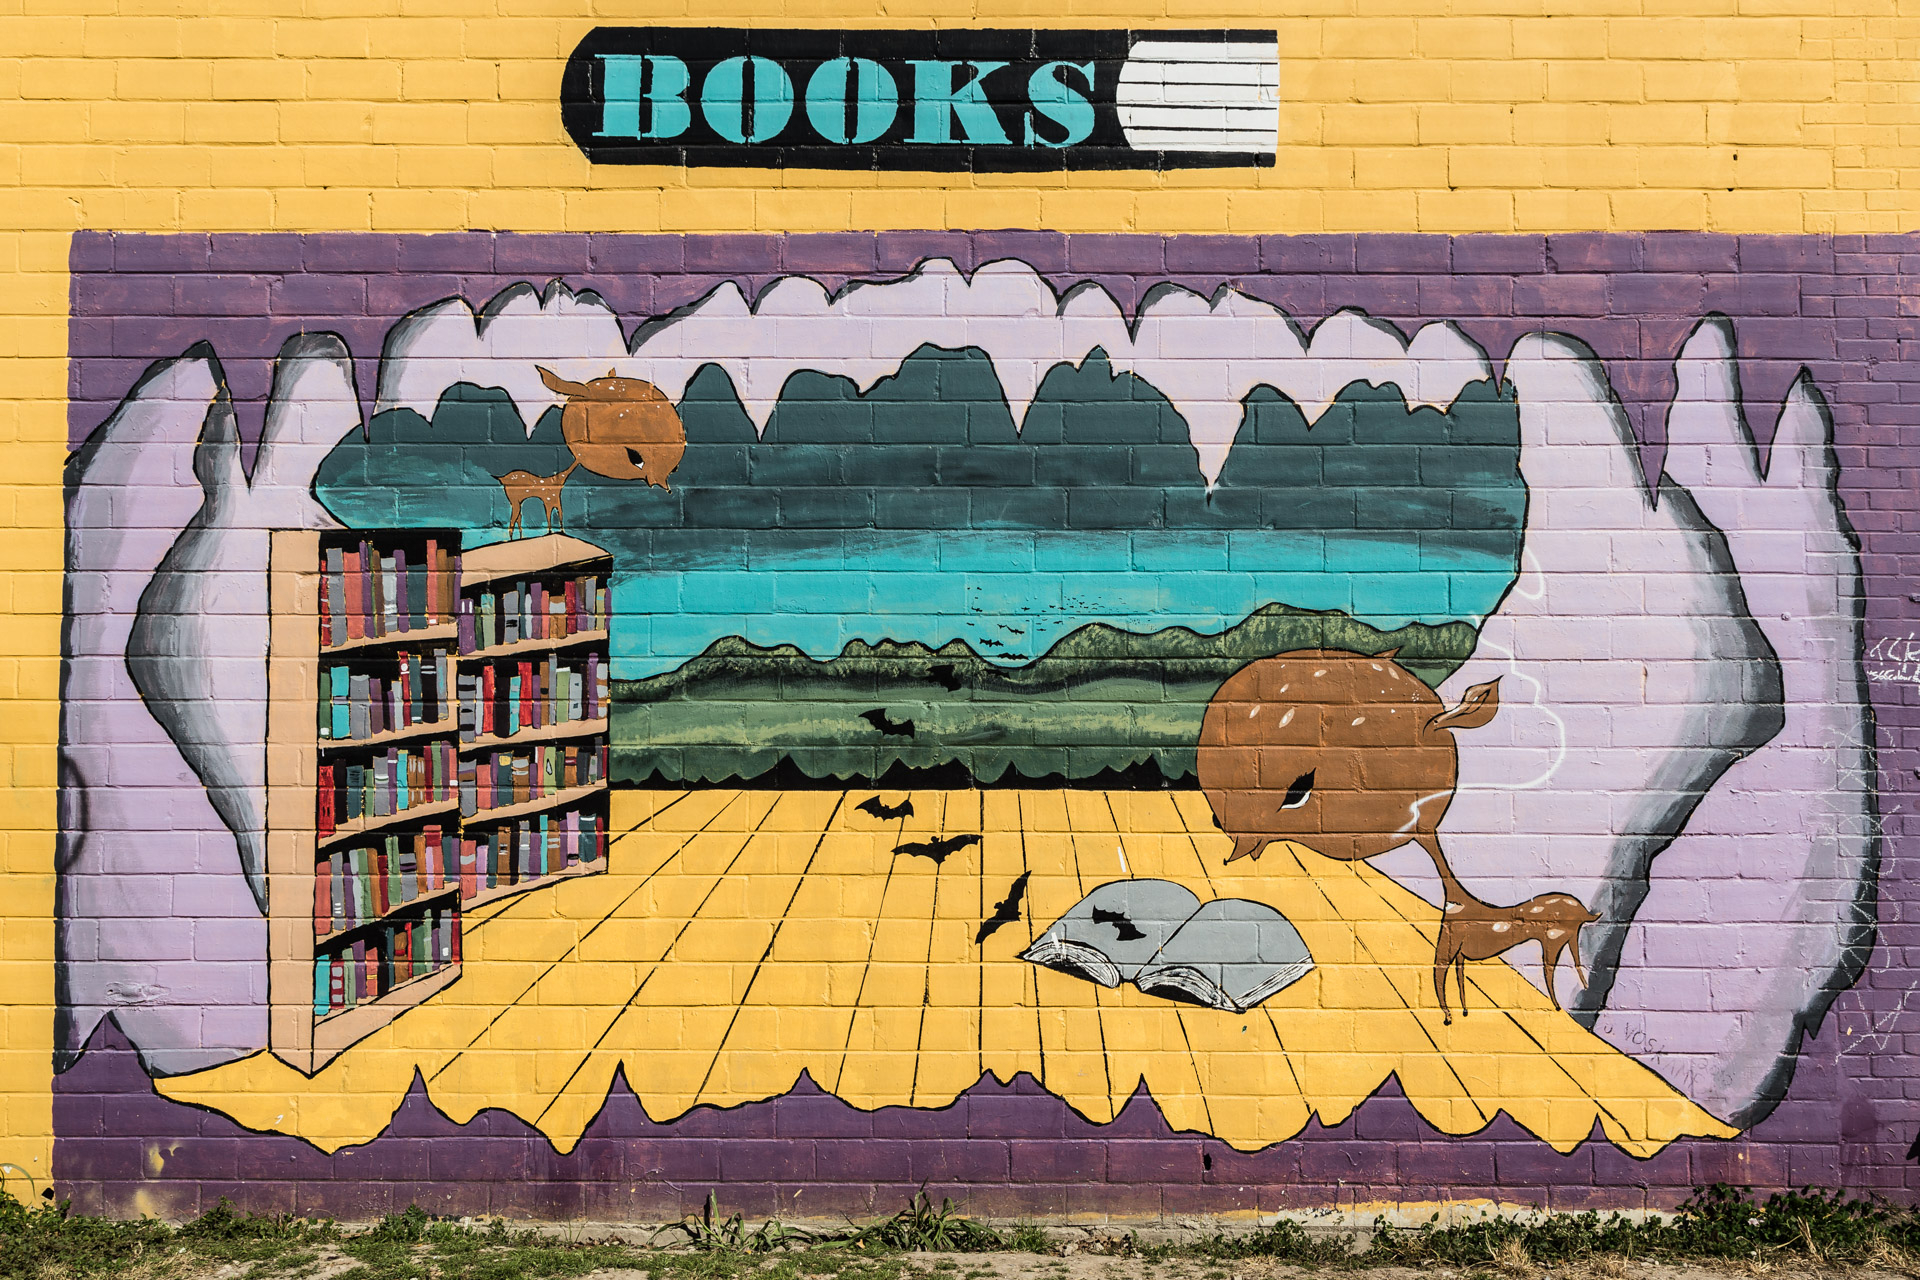 Austin Street Art (books)